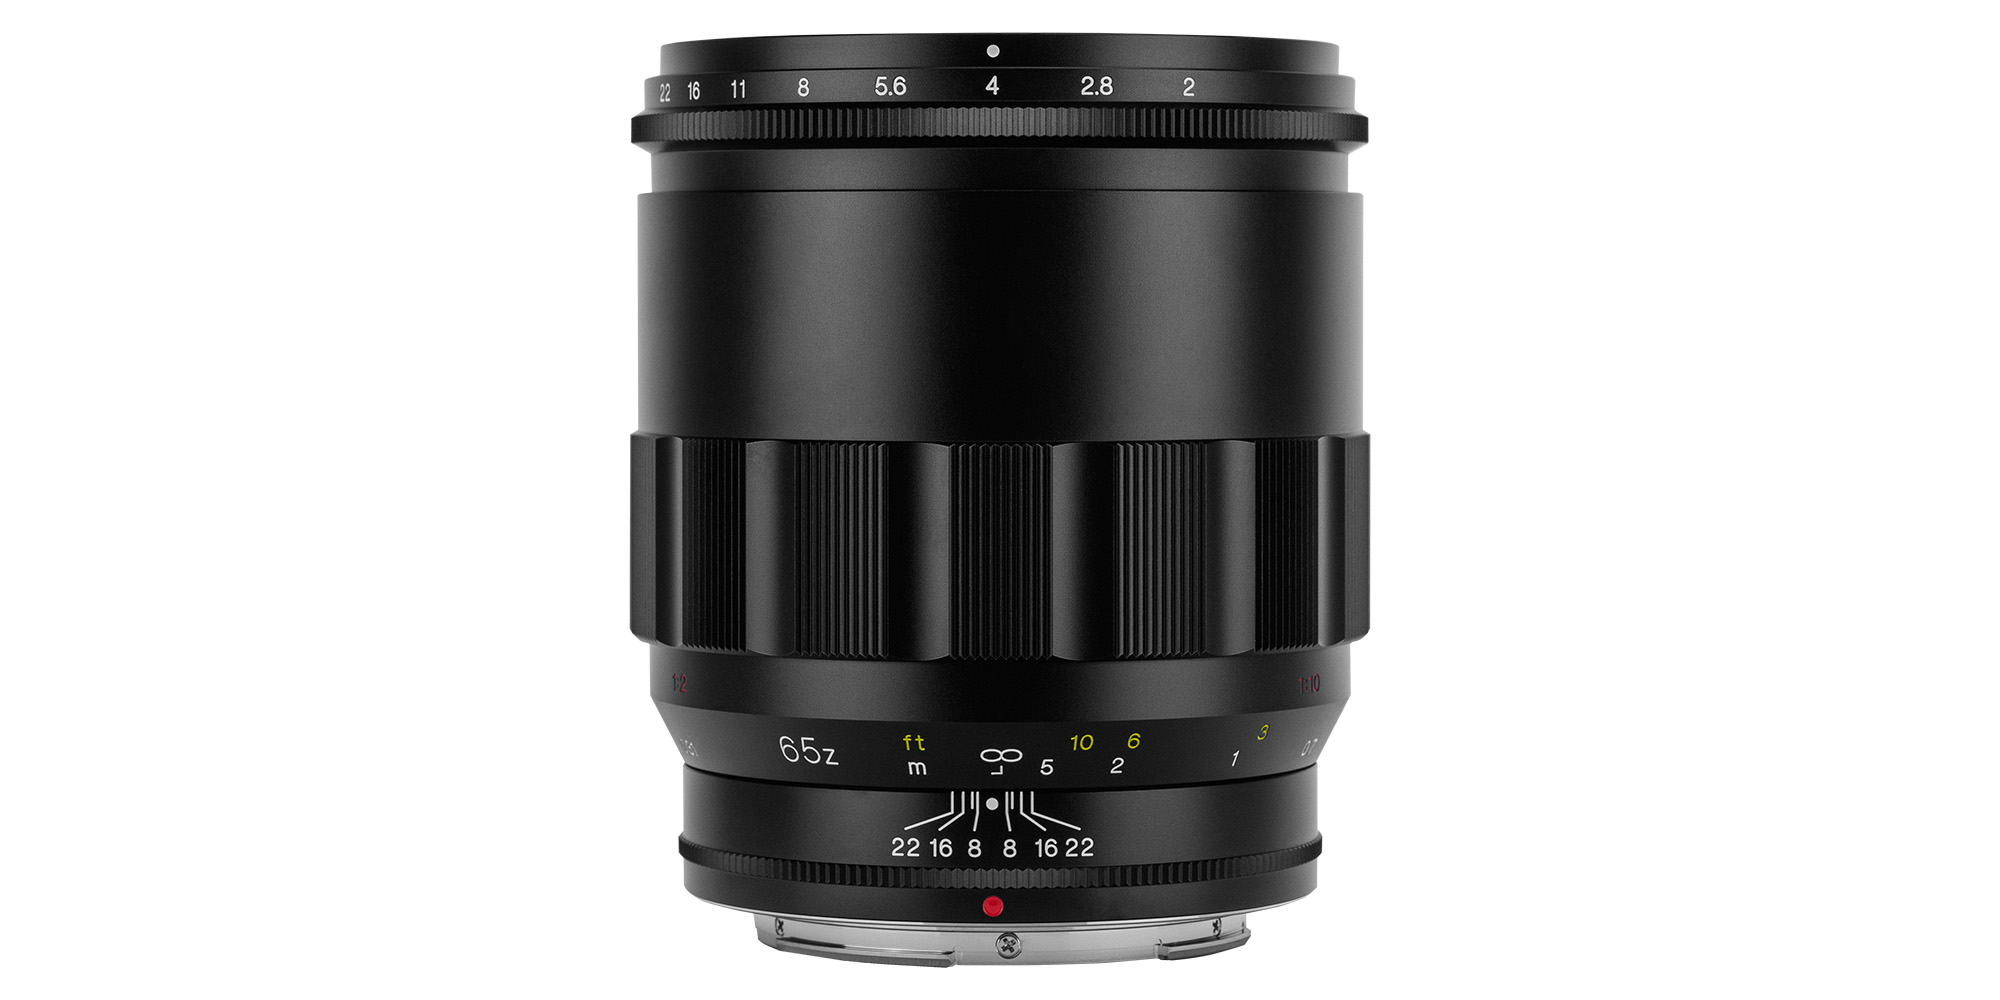 Voigtlander Macro APO Lanthar 65 mm f/2.0 lens for Nikon Z - Quality without compromise